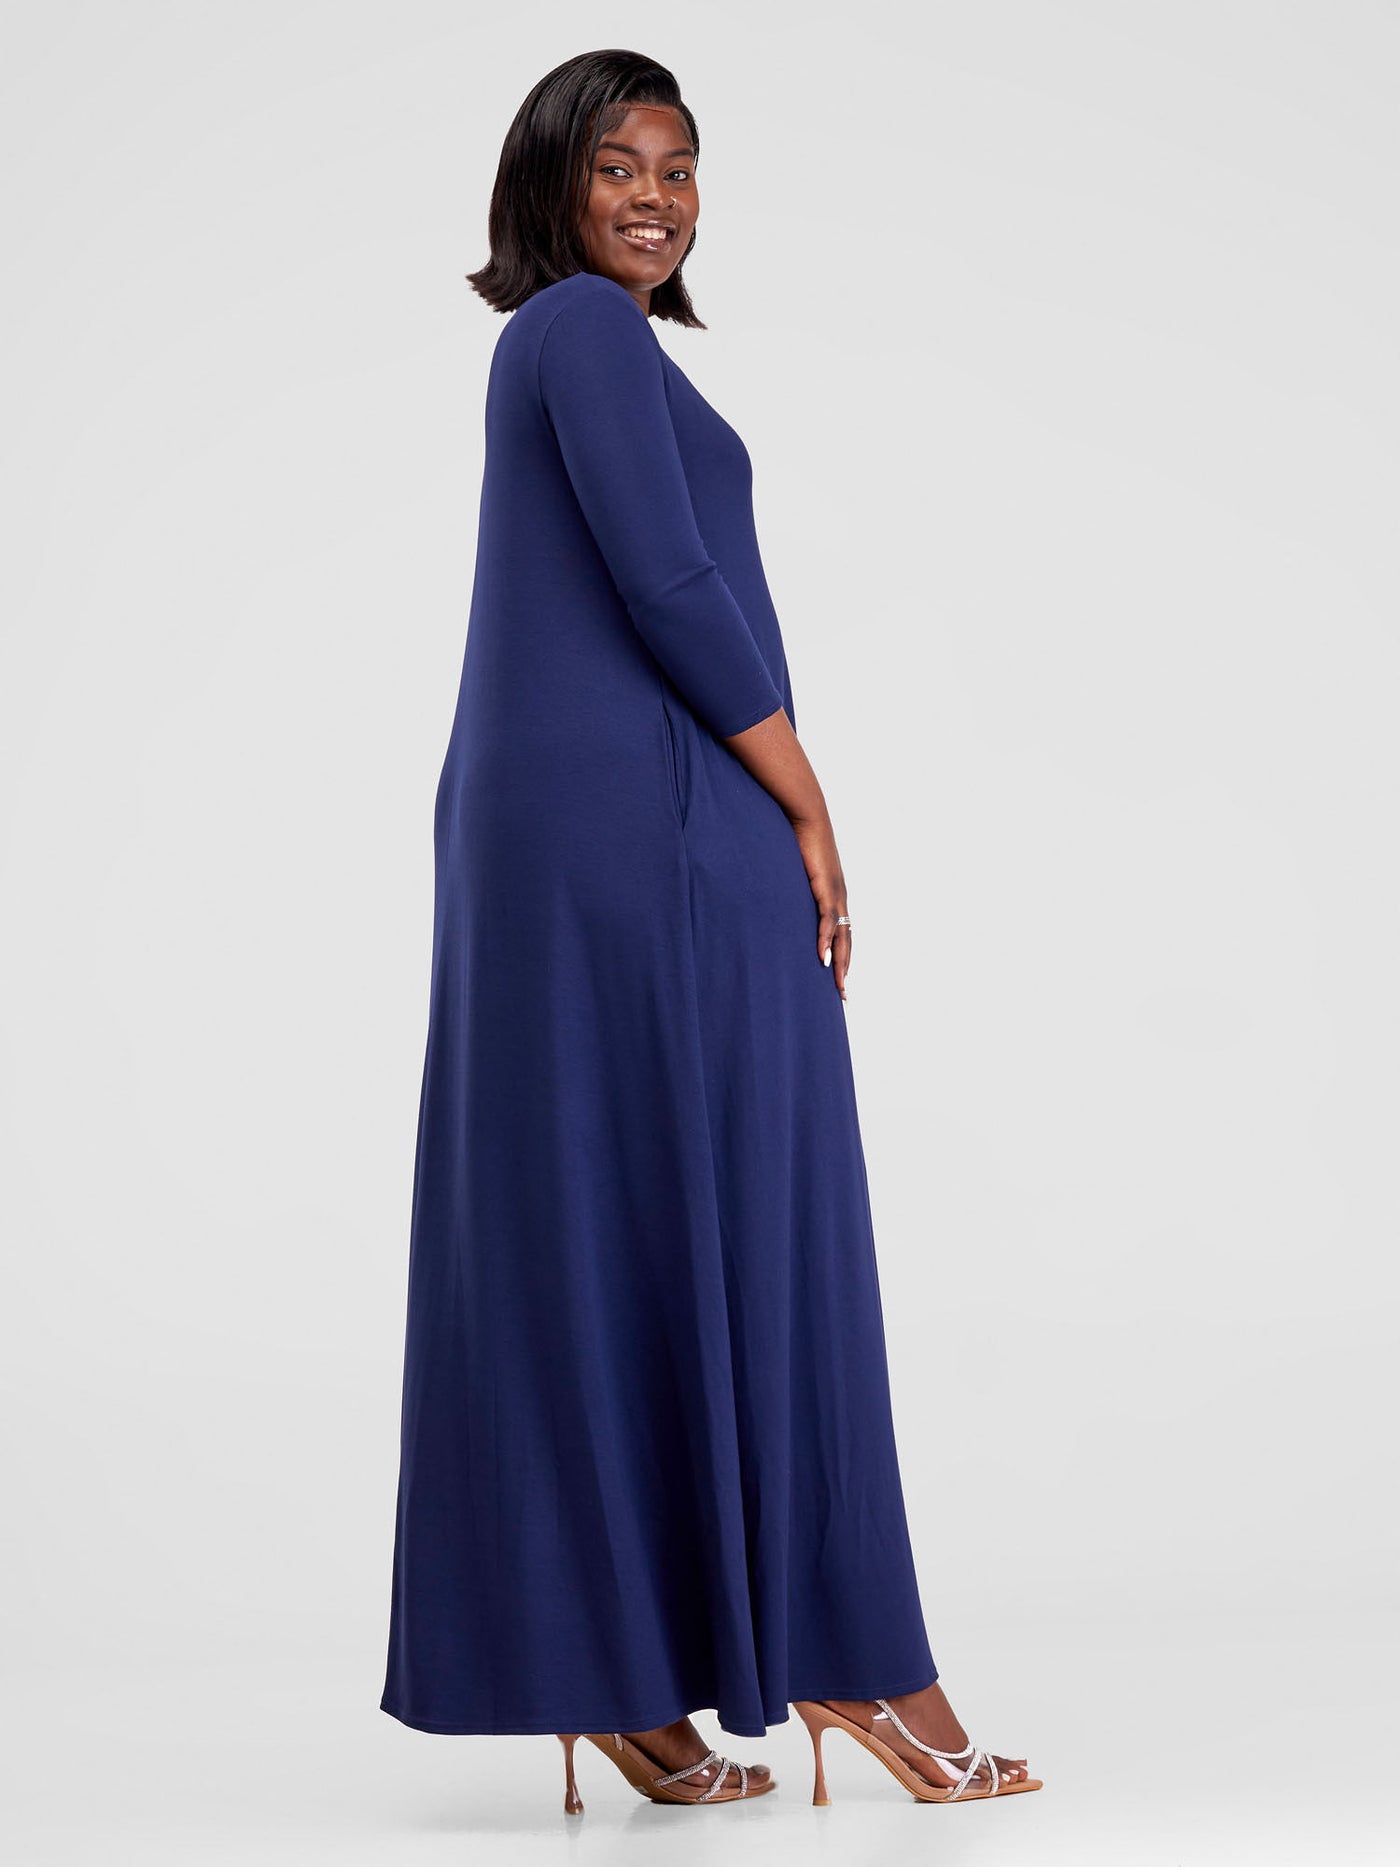 Vivo Leila 3/4 Sleeve Tent Maxi Dress - Navy Blue